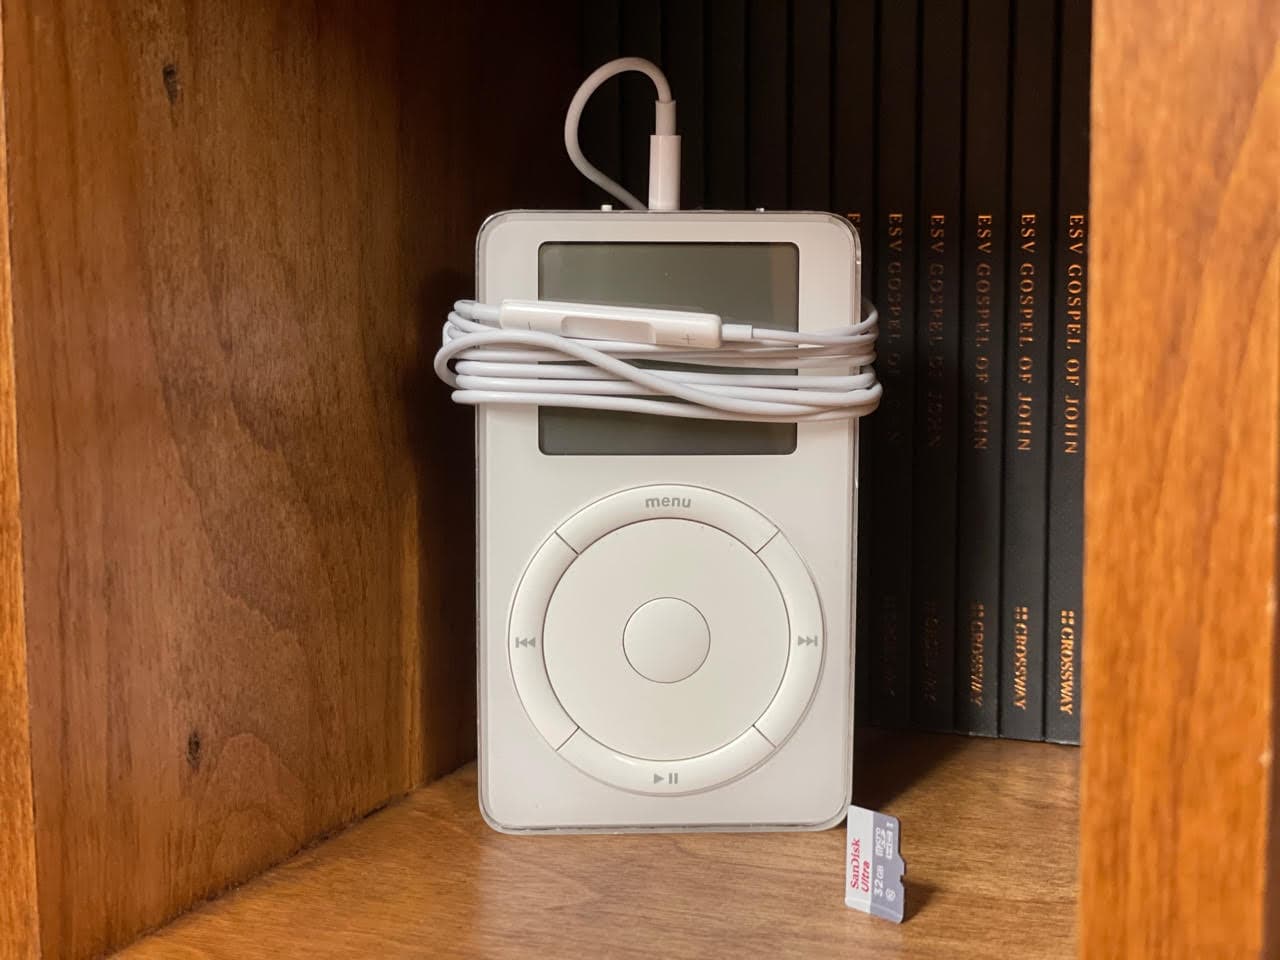 This 2nd-gen iPod isn't just on display. It still works.